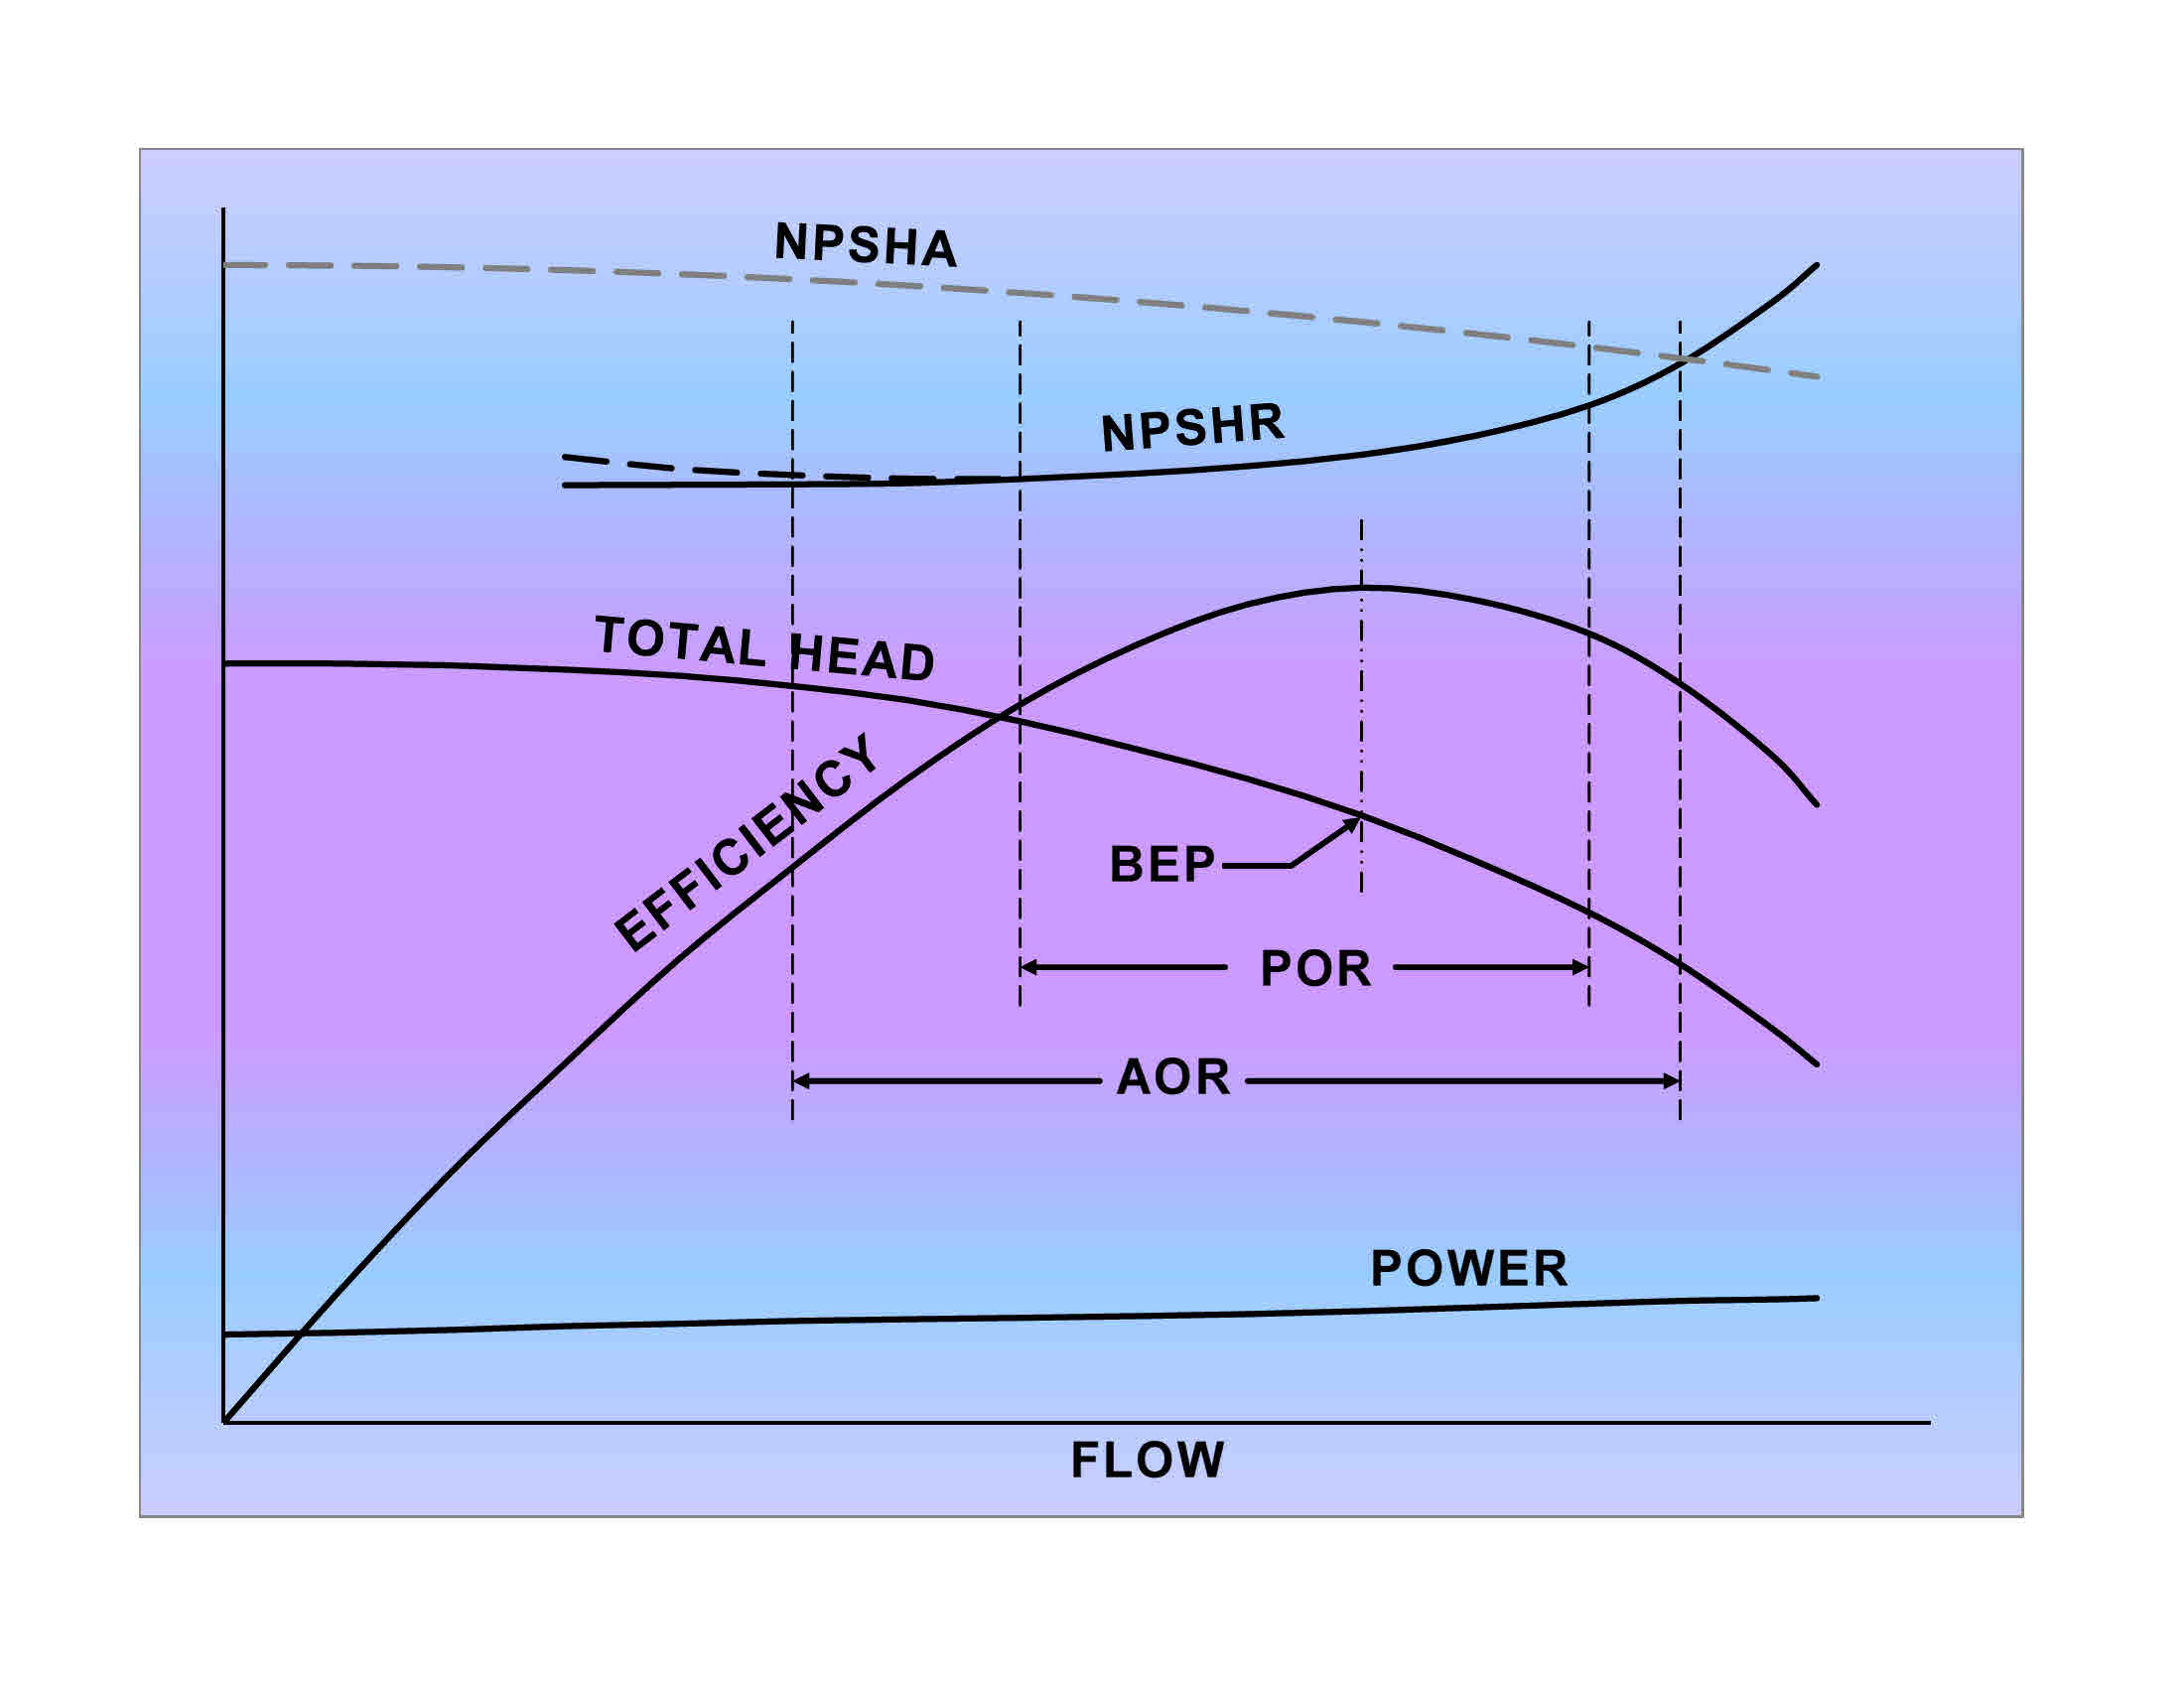 Pump Head vs. Flow with NPSH, NPSHA, NPSHR, BEP, POR, AOR